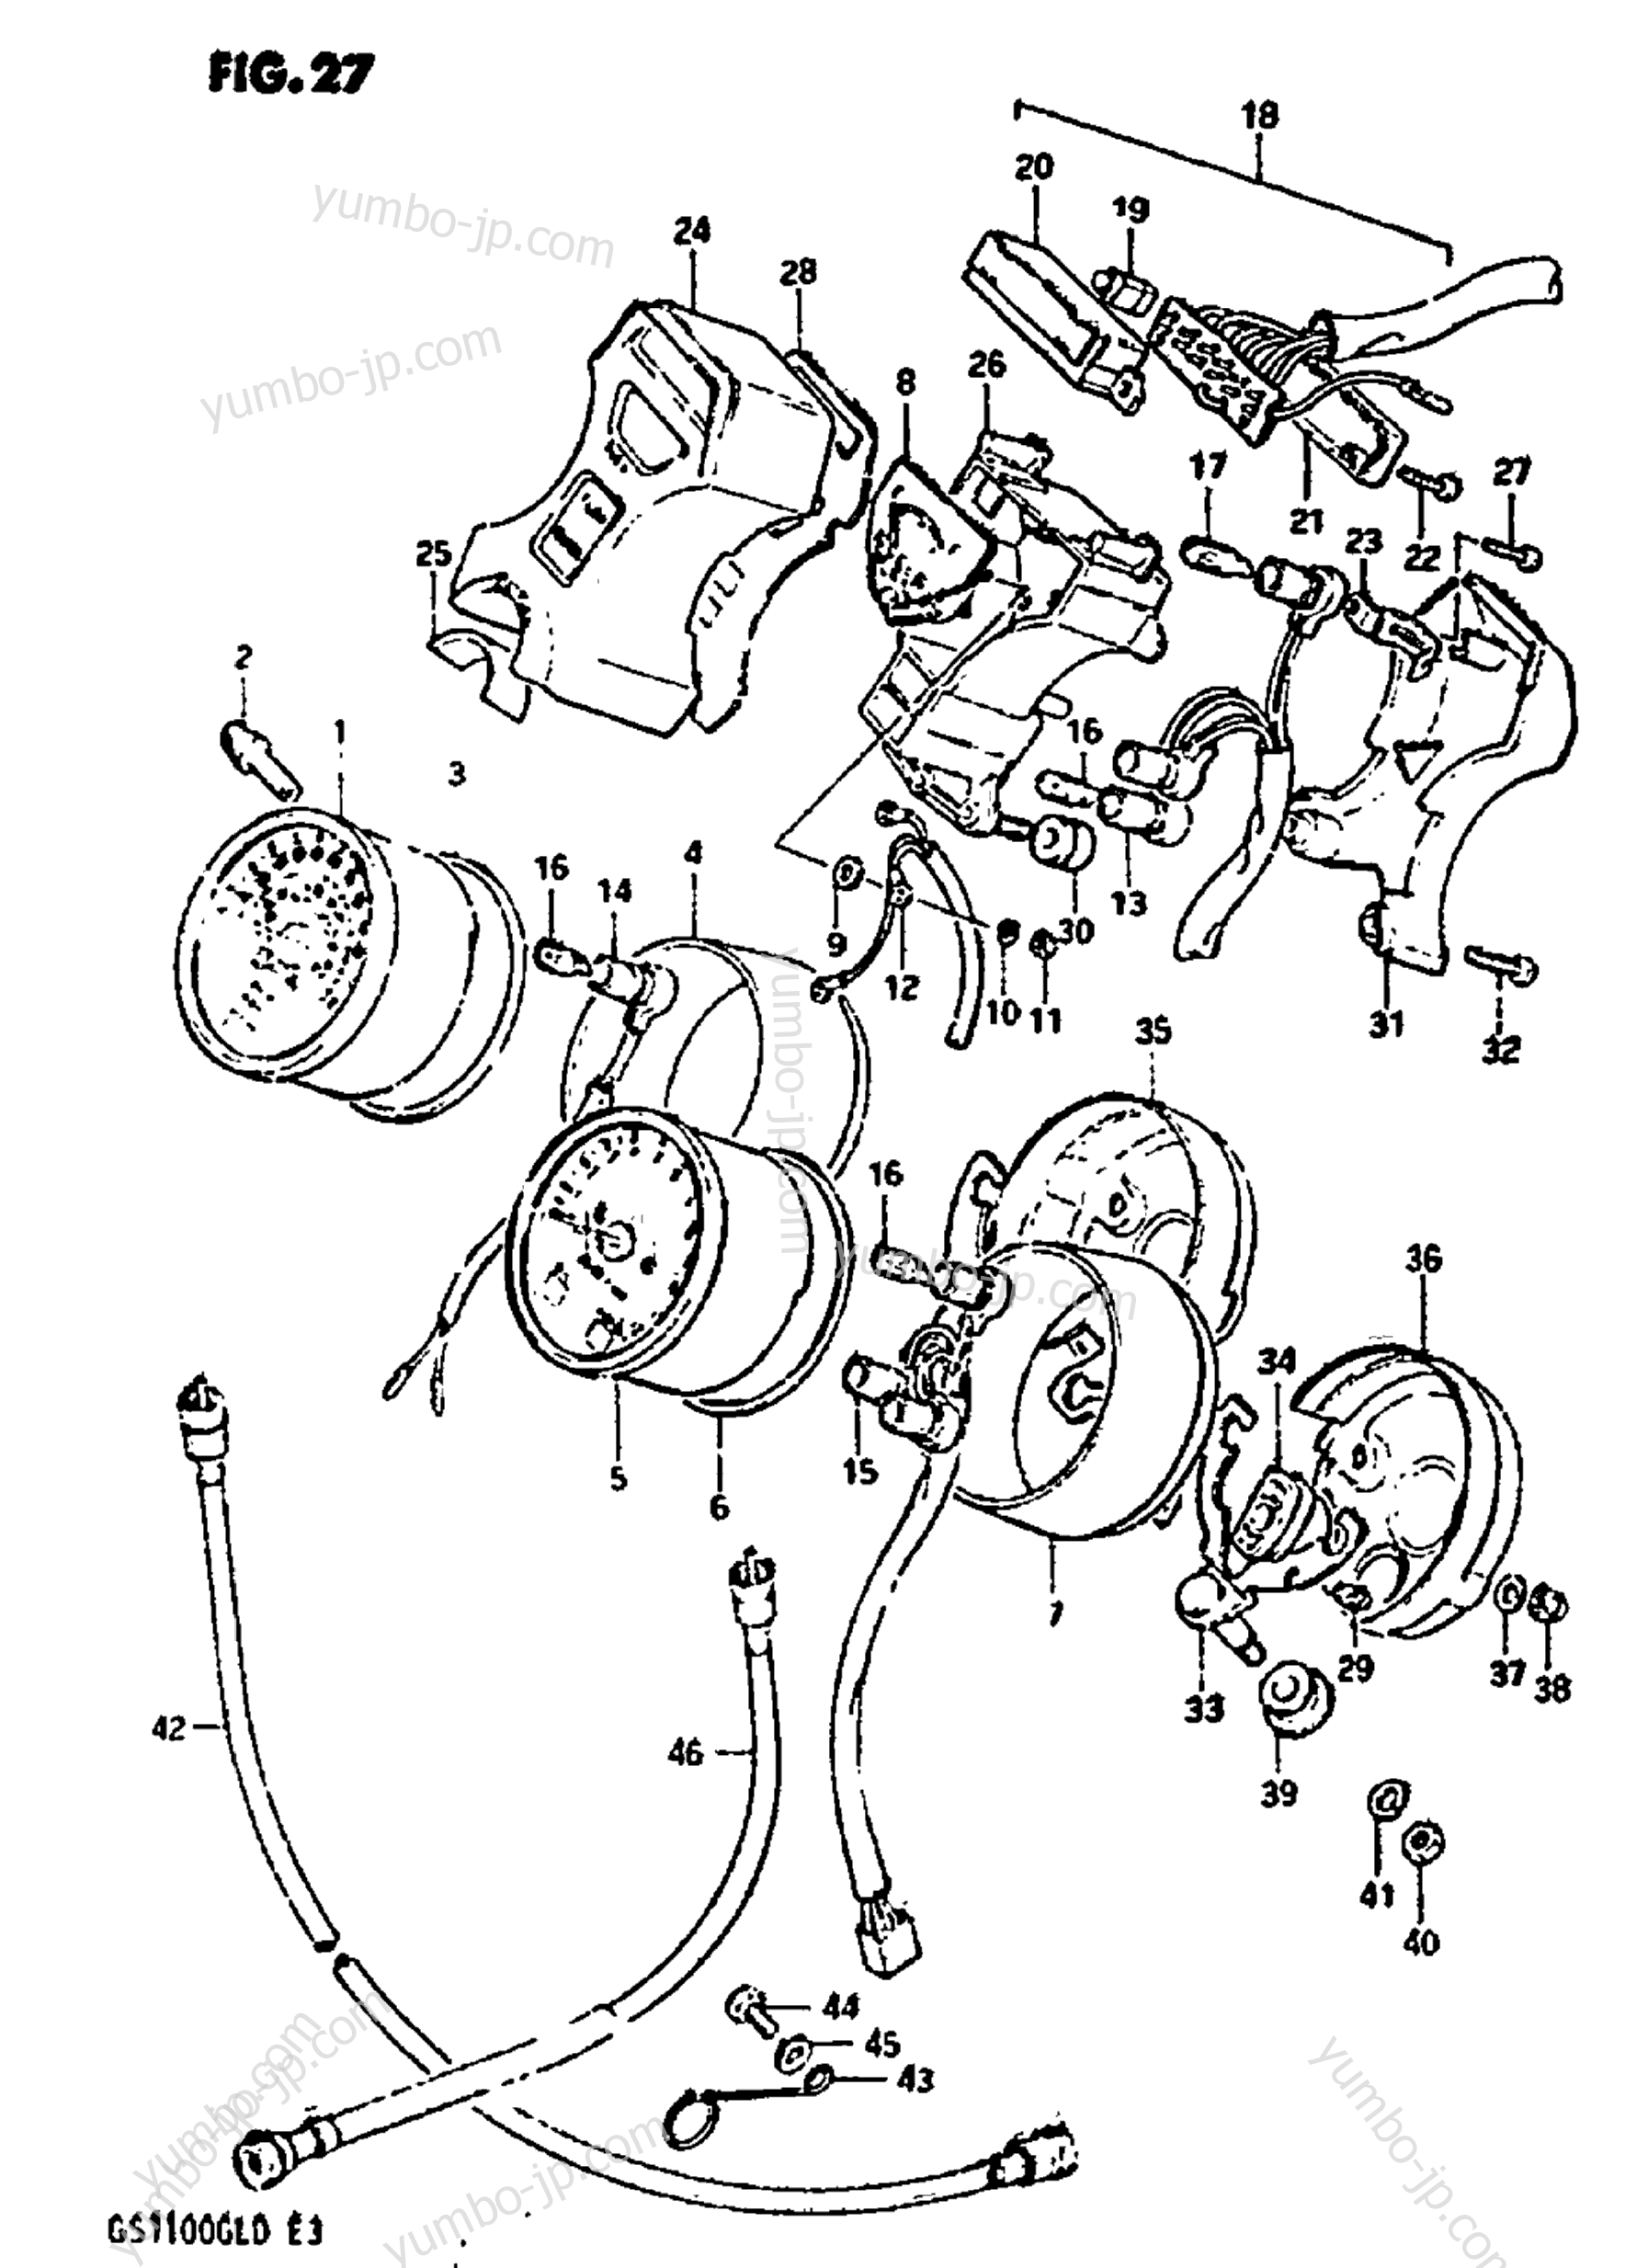 Speedometer-Tachometer for motorcycles SUZUKI GS1100GL 1982 year